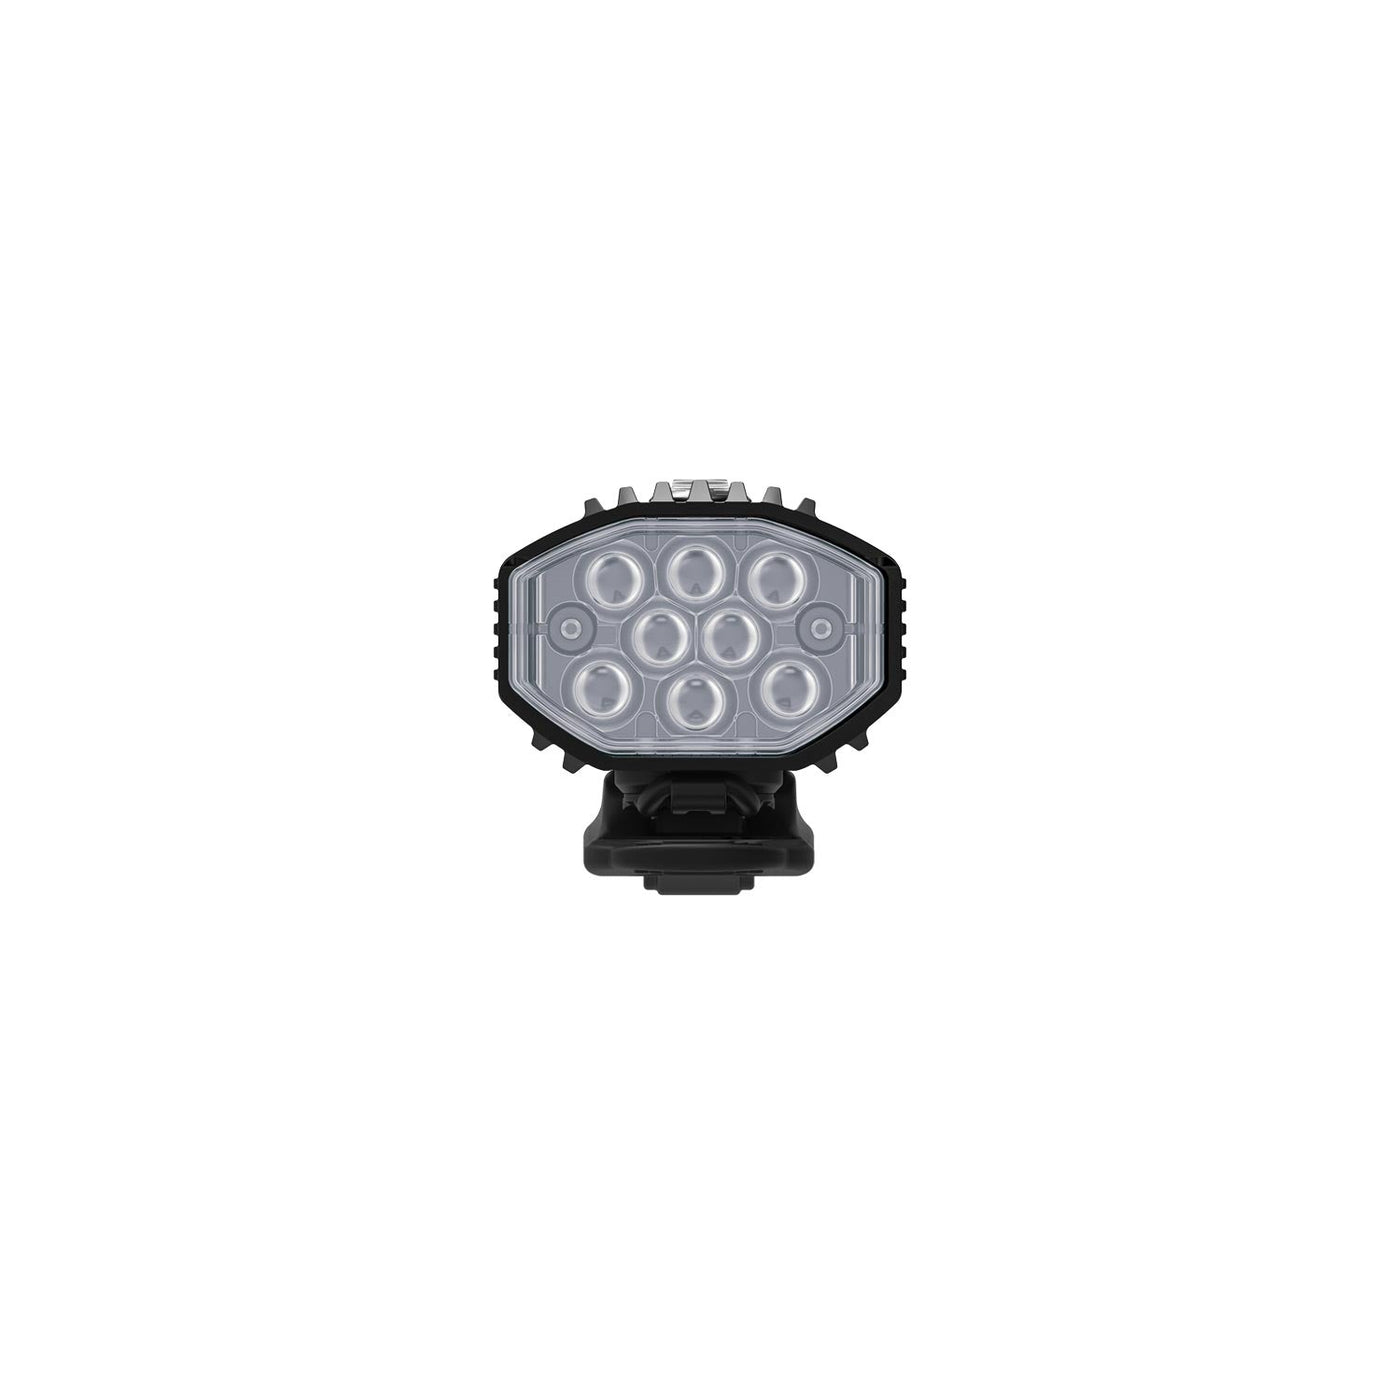 Lezyne Micro Drive 800+ / KTV Drive+ Cycle Light Set